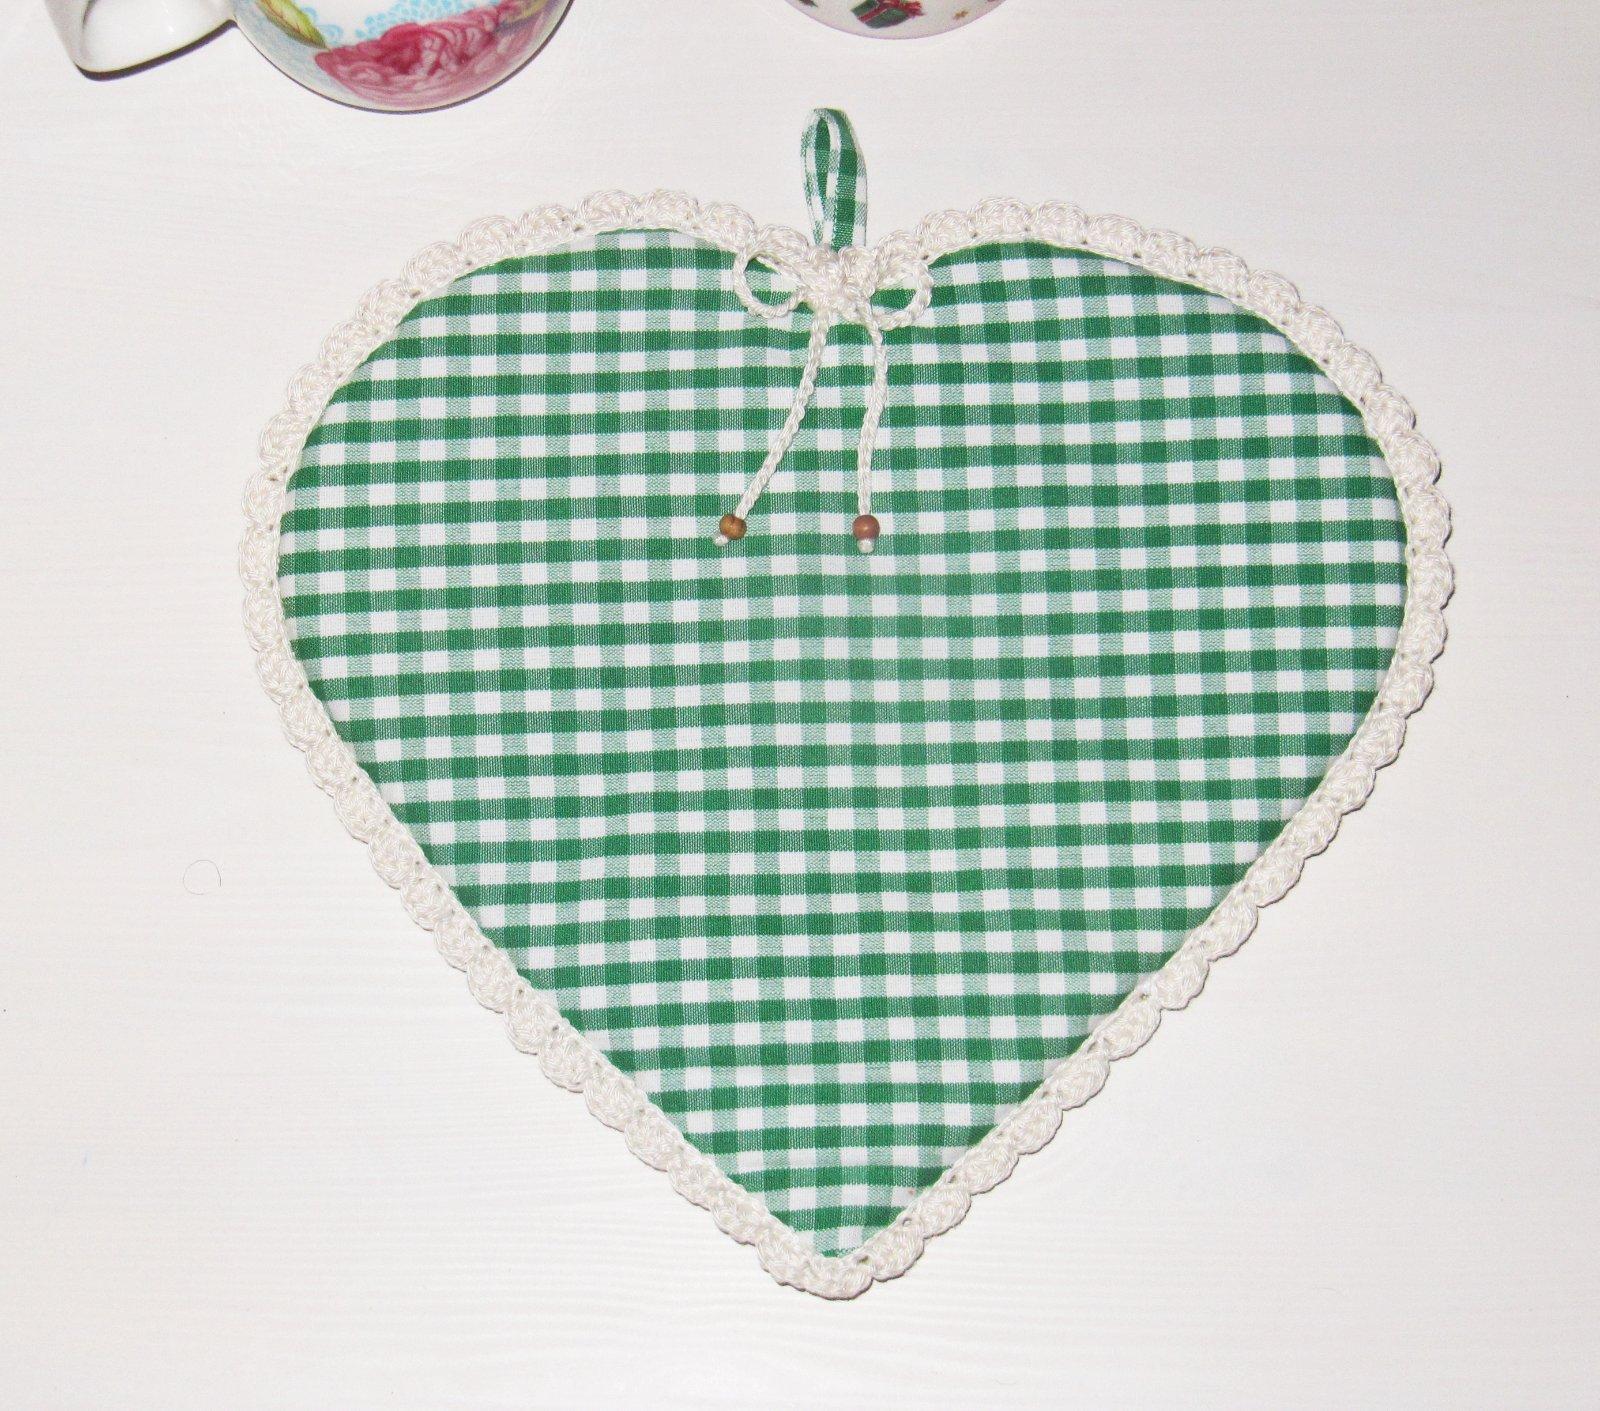 Vidiecka podložka srdce pod pohár, šálku. 26 cm x 27 cm - Obrázok č. 1